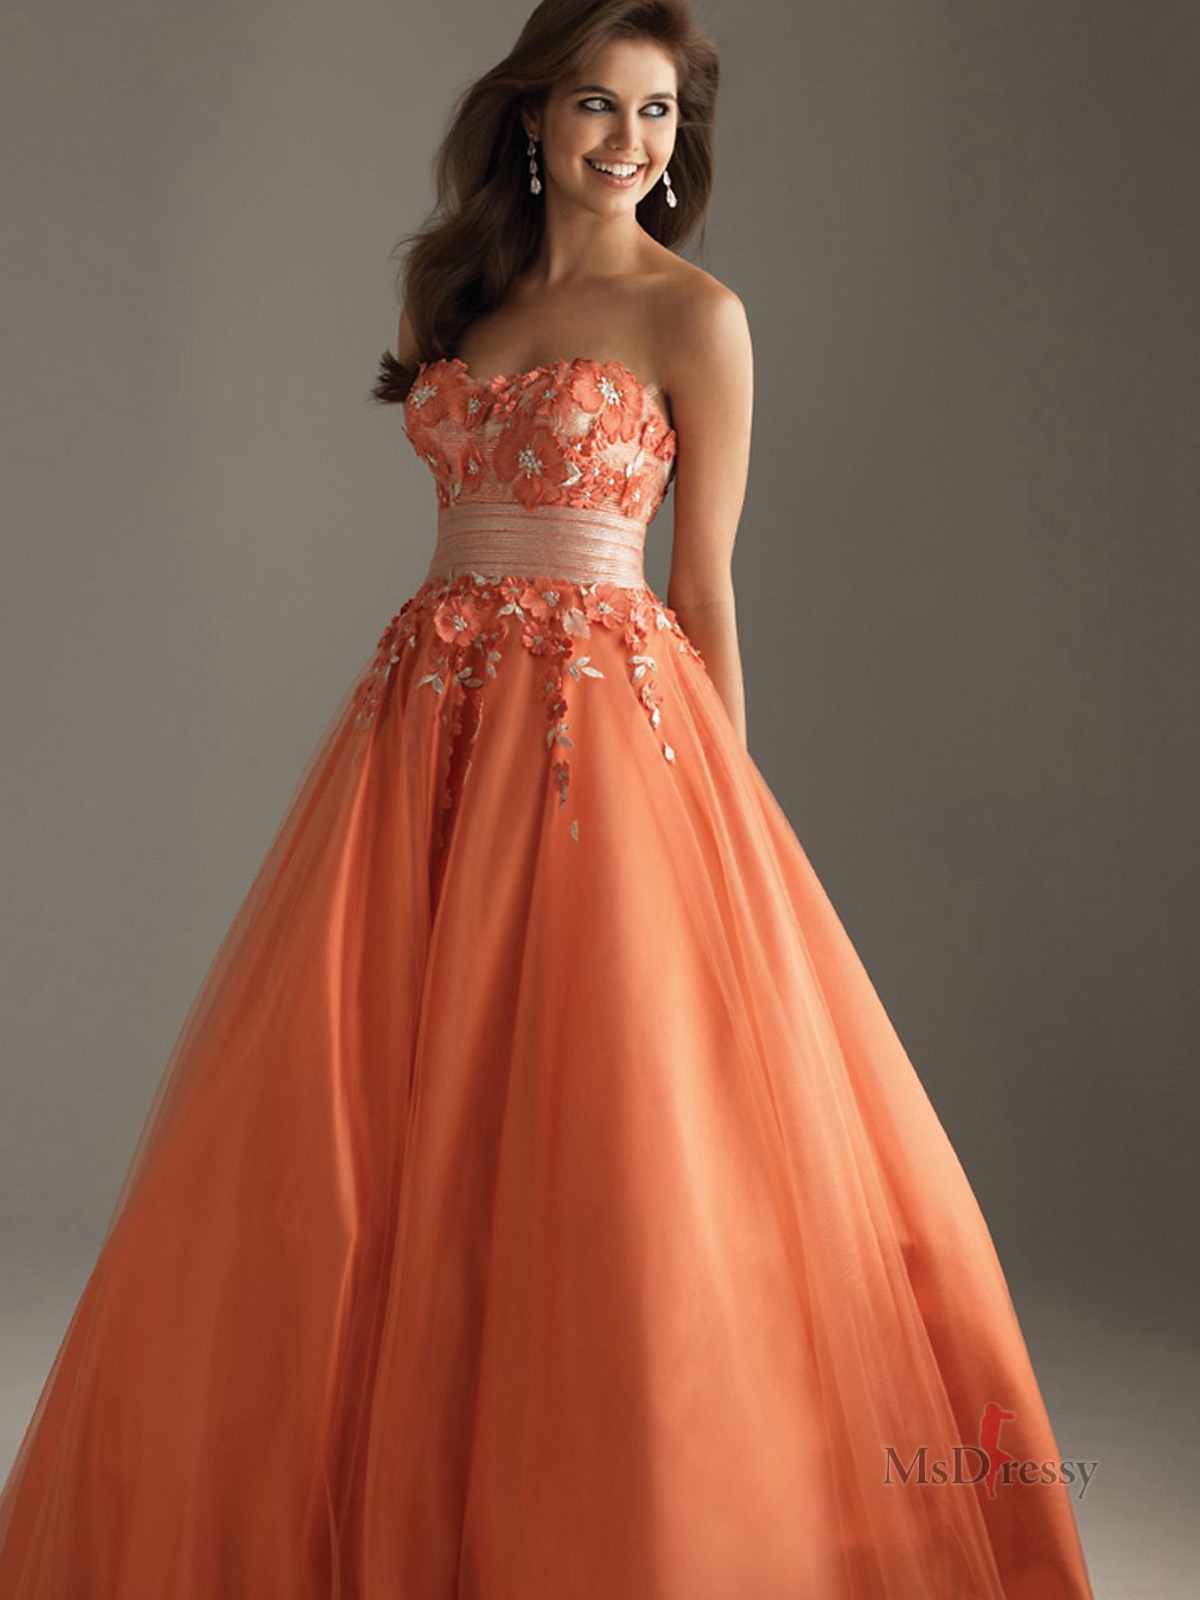 Orange Prom Dresses - Orange Dresses for Prom